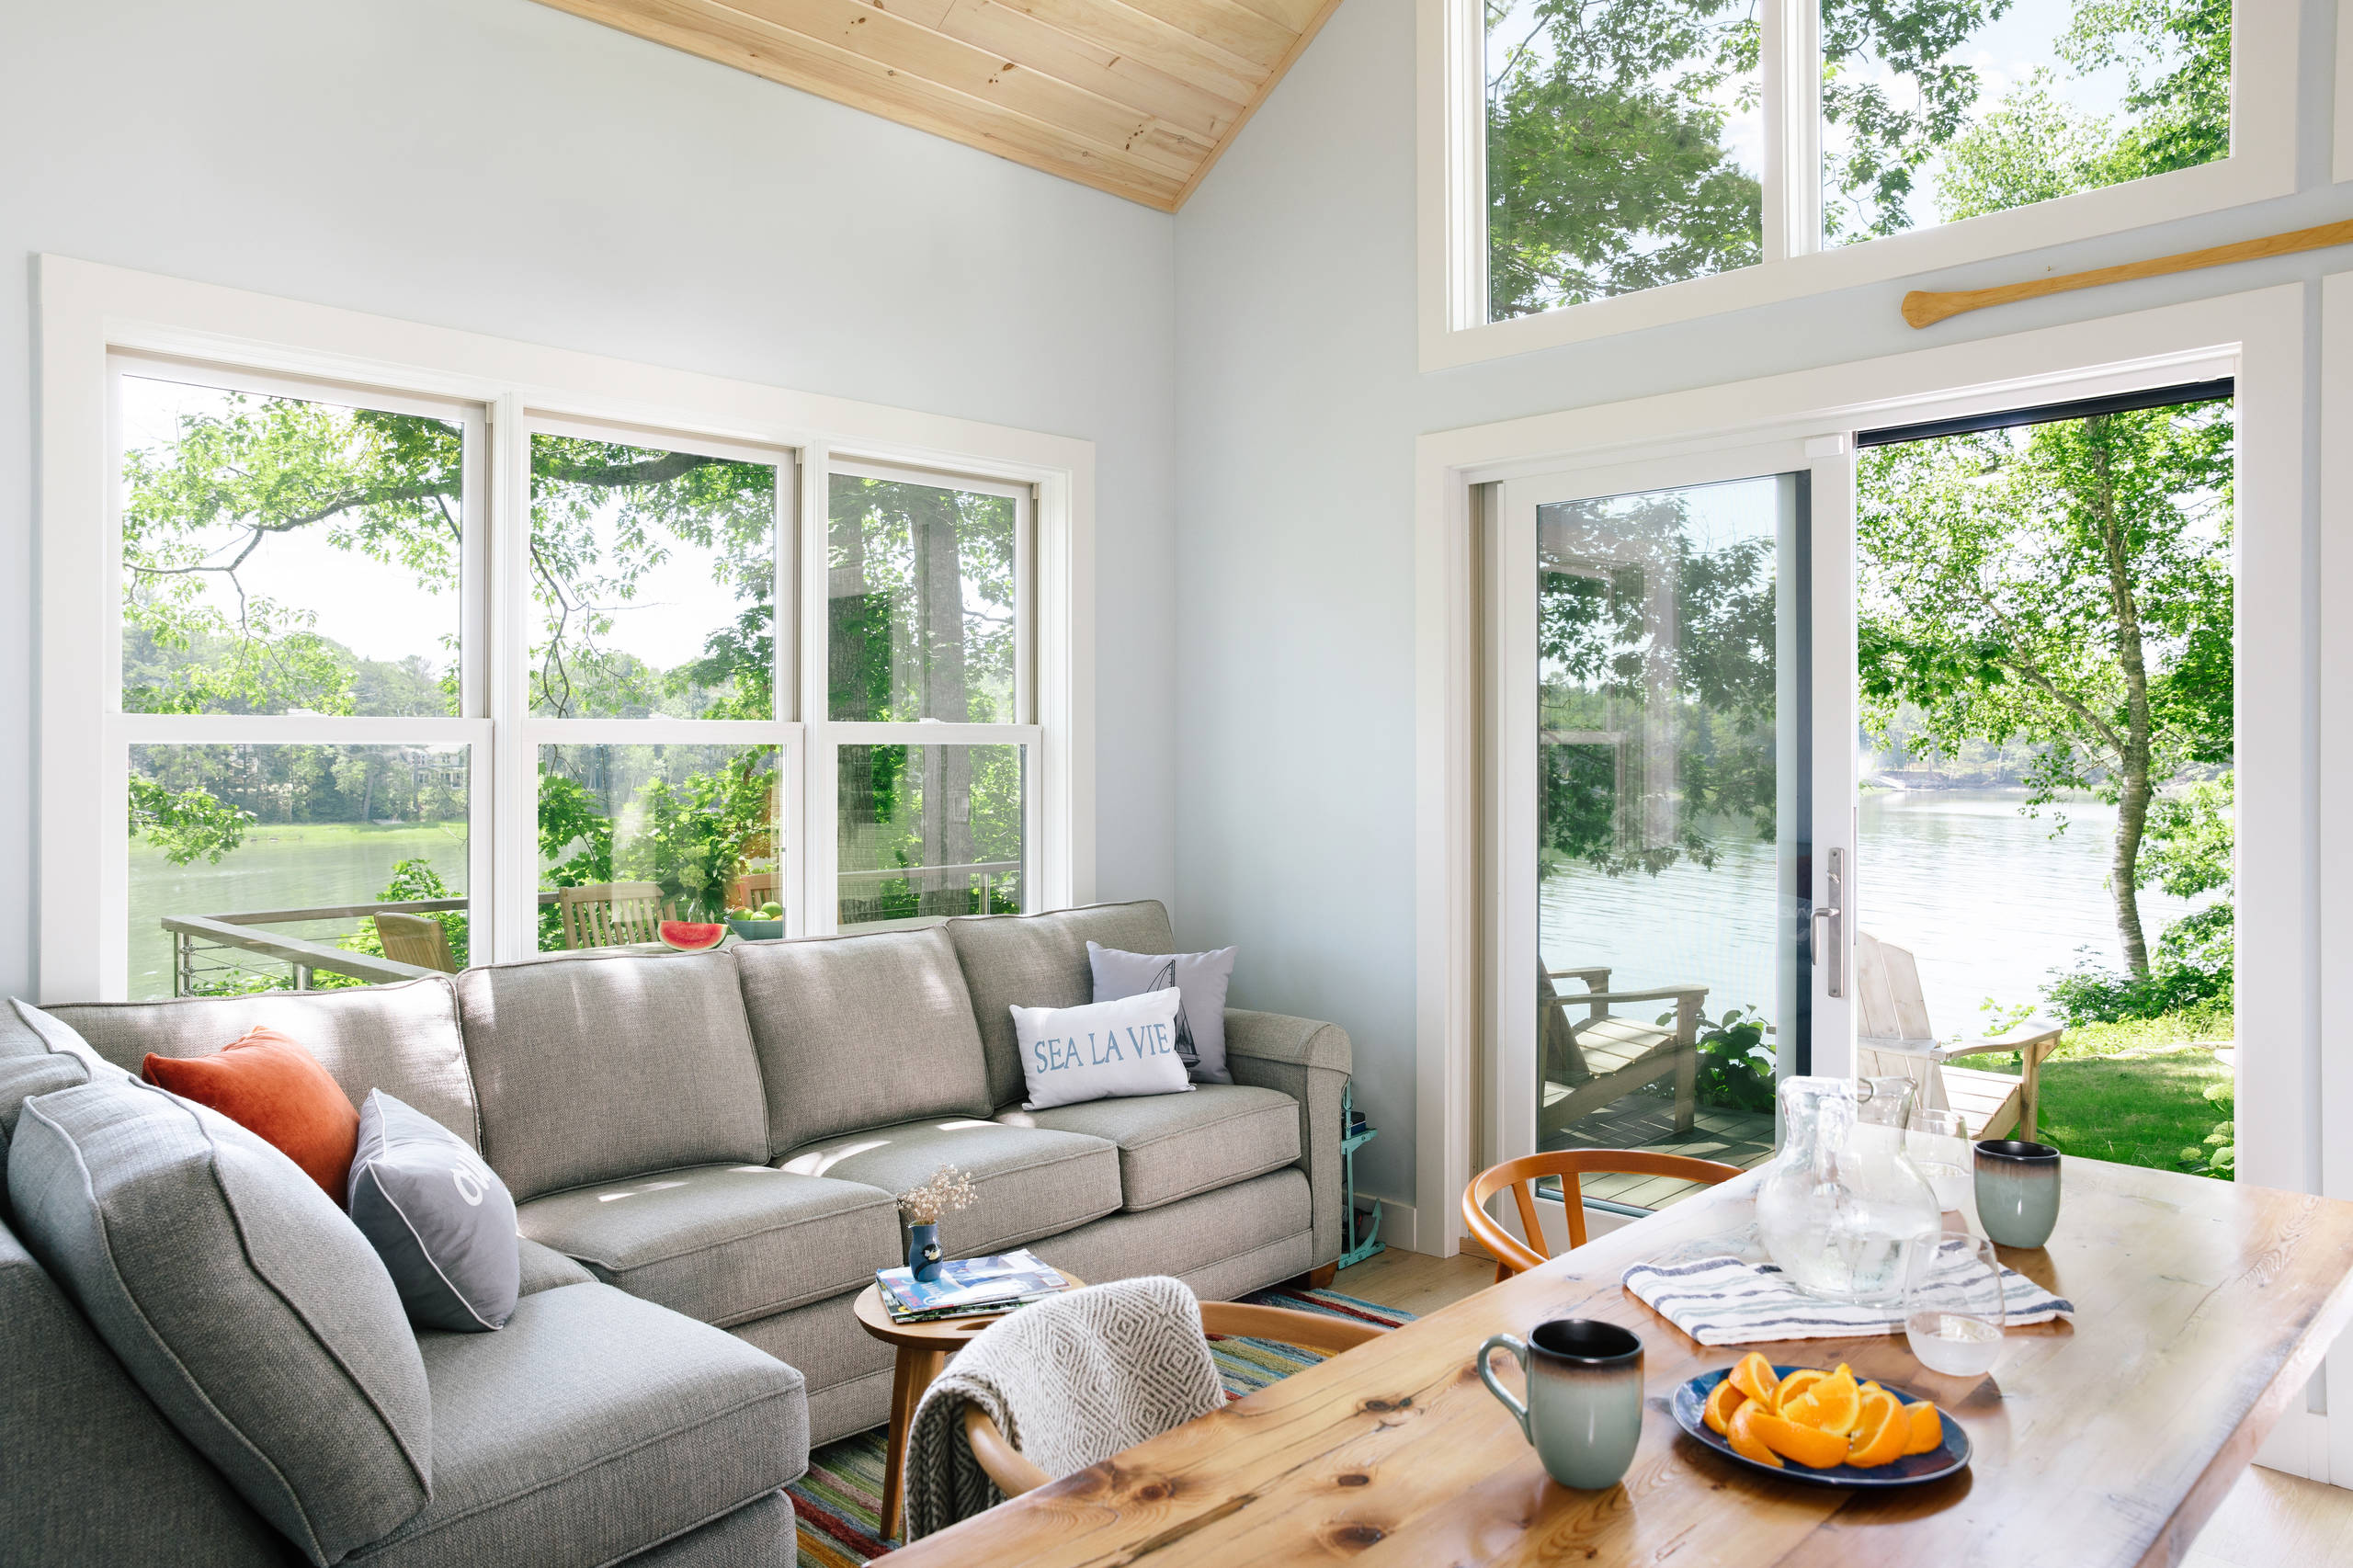 75 Small Farmhouse Living Room Ideas You'll Love - June, 2023 | Houzz